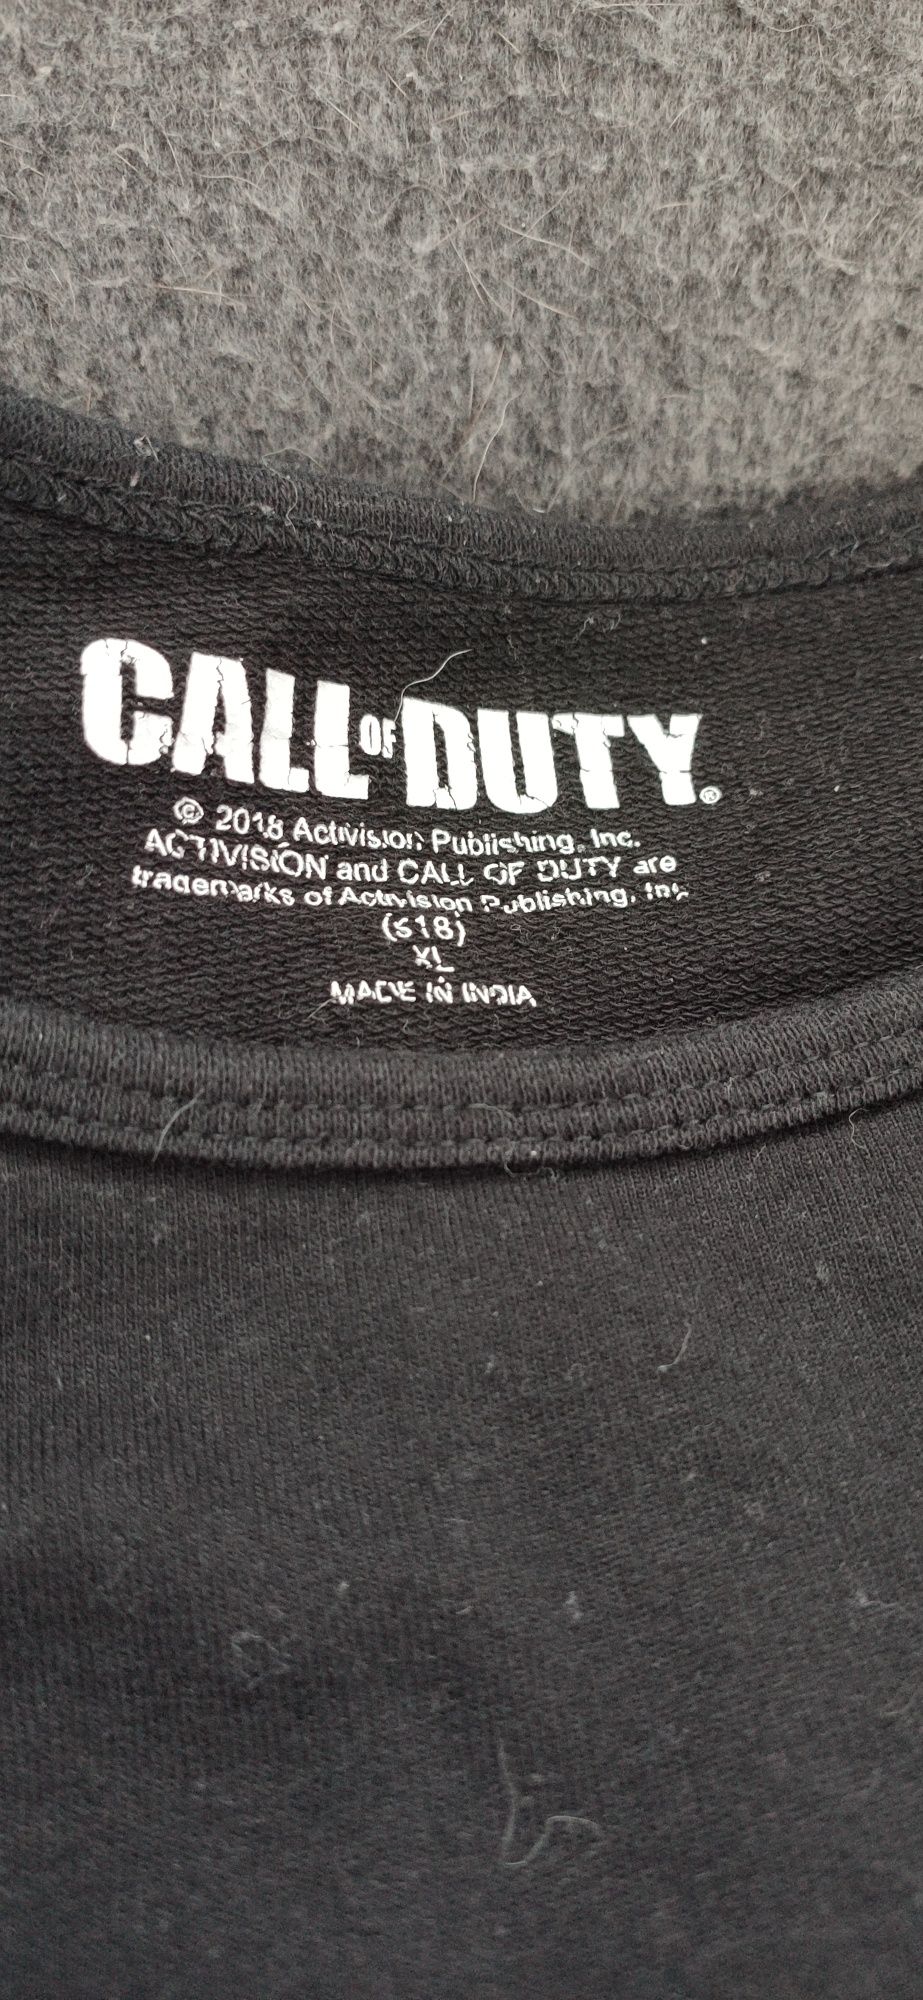 Bluza Call of Duty  oryginał